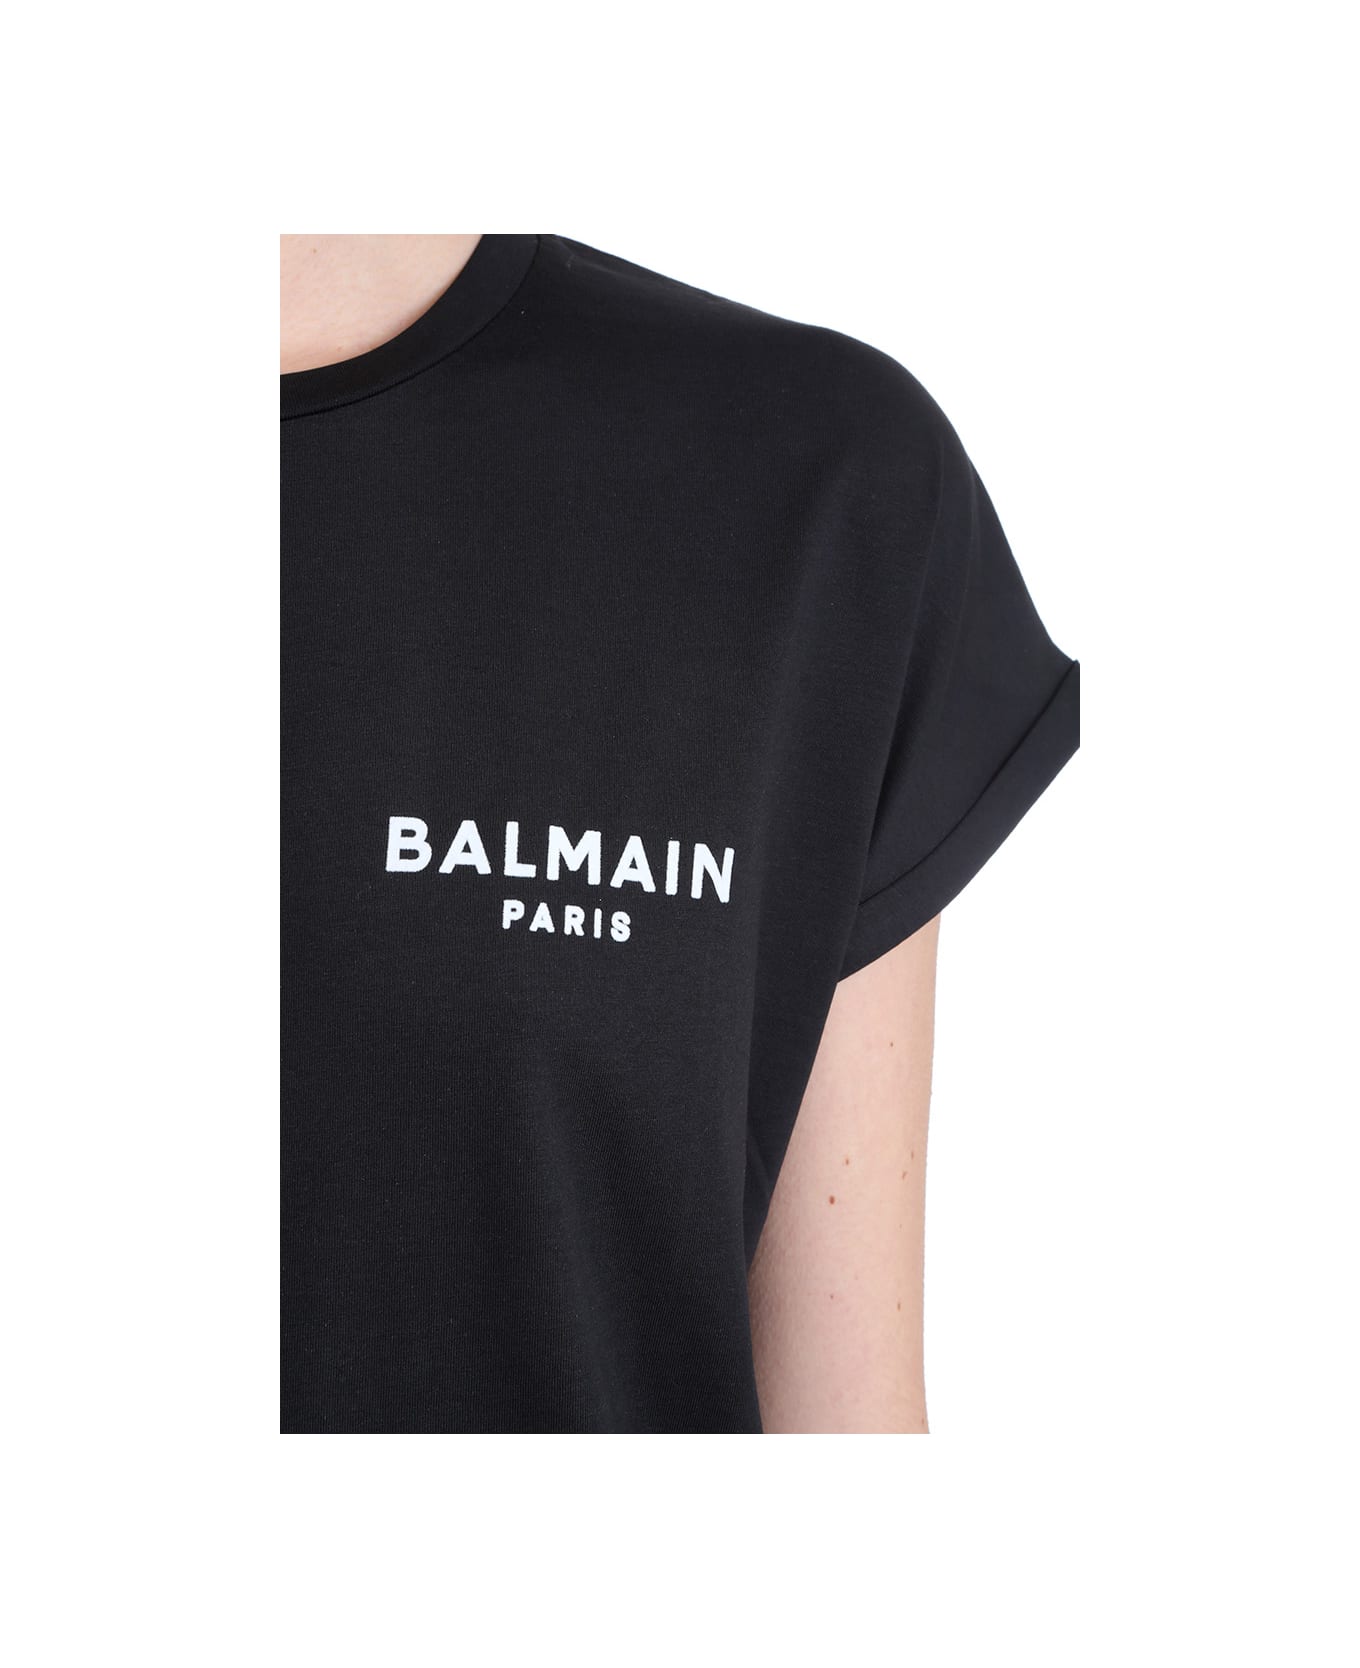 Balmain T-shirt In Black Cotton - Nero/bianco Tシャツ